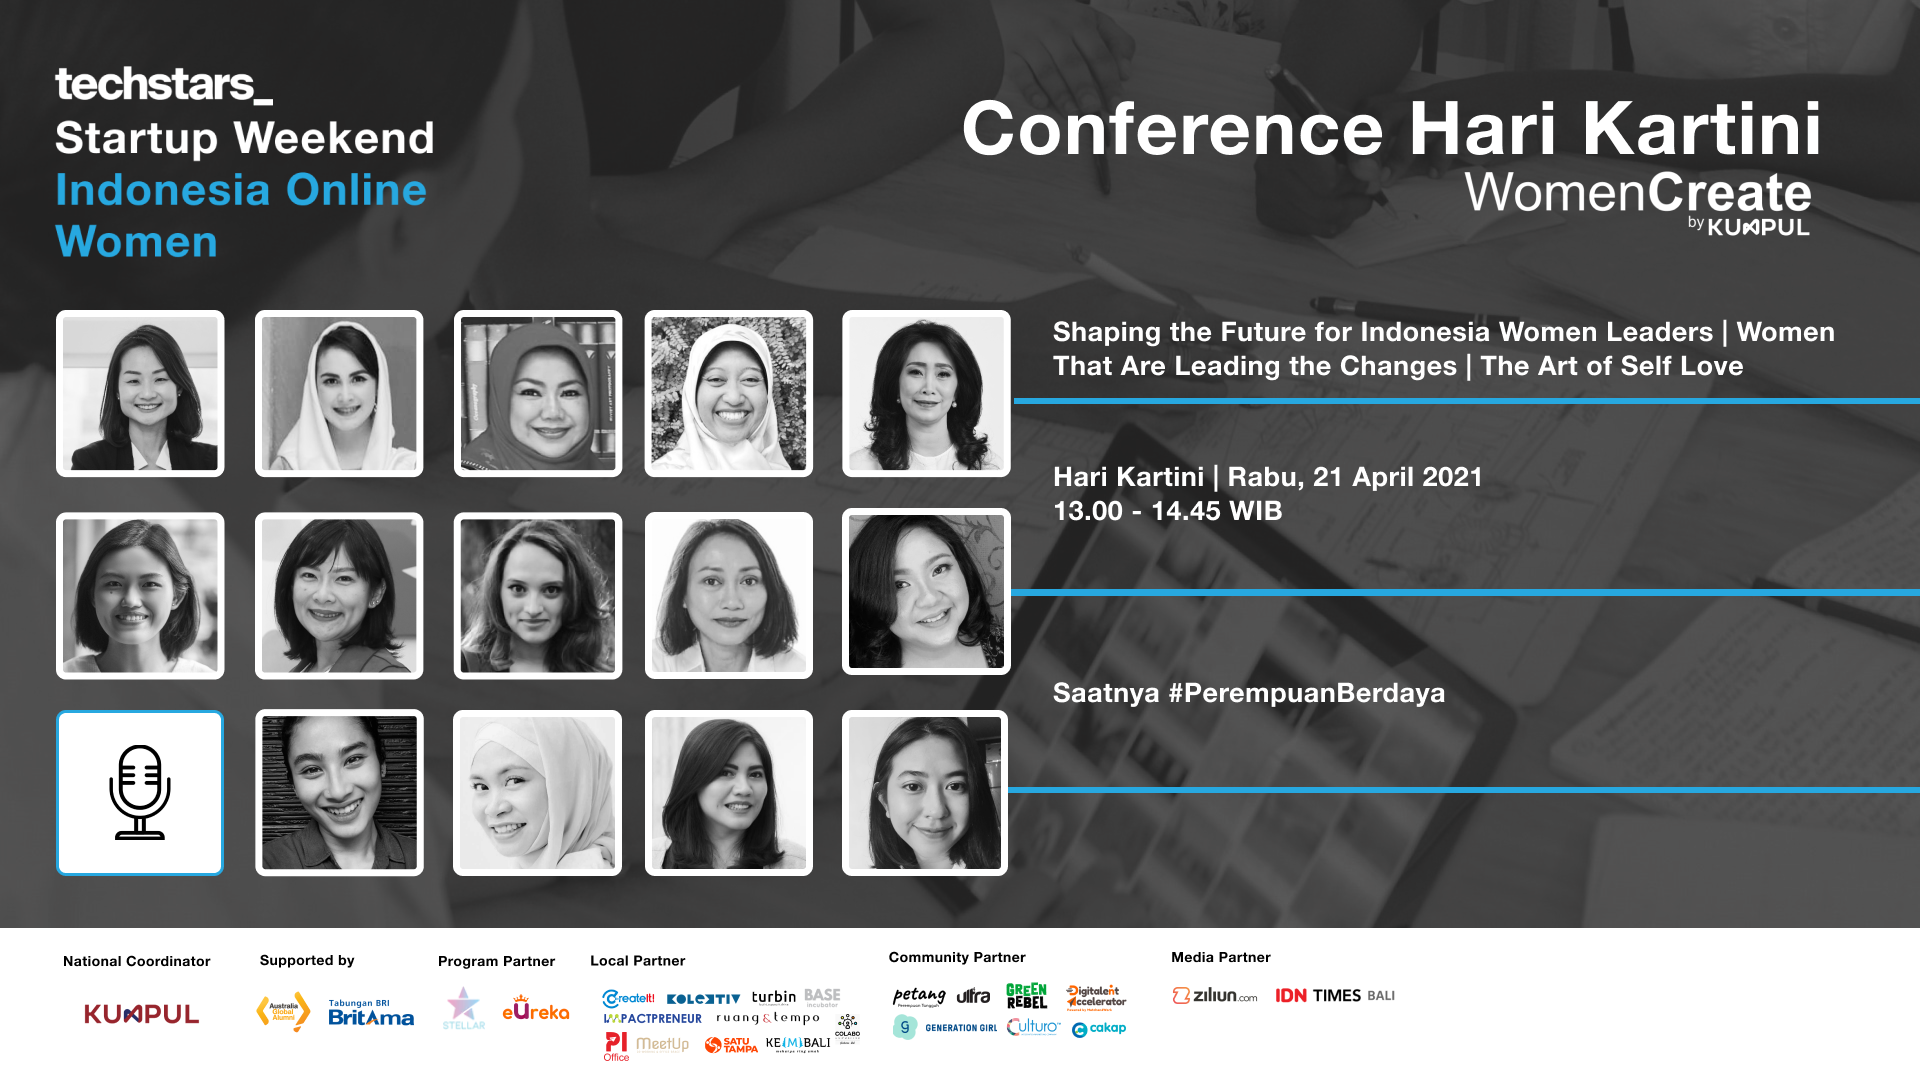 Kumpul - Startup Weekend Indonesia Online Women